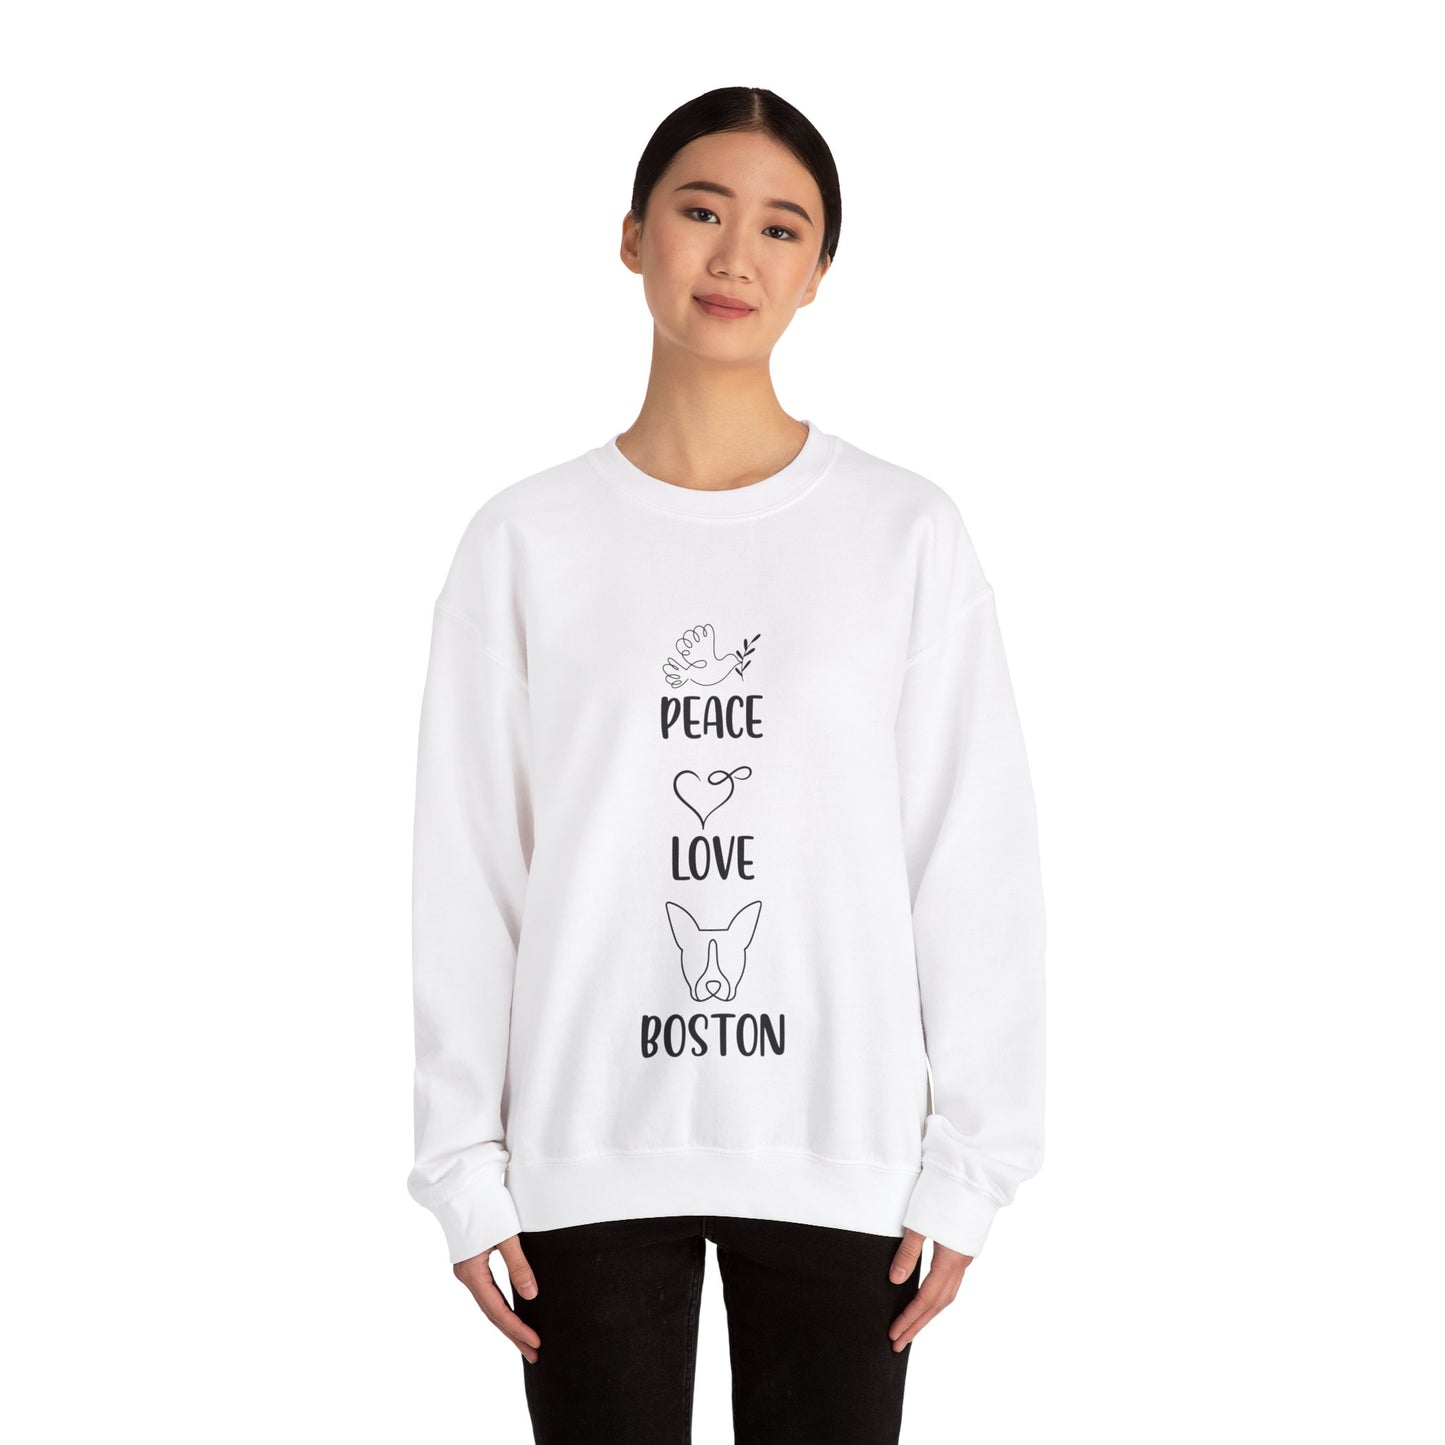 Bruin  - Unisex Sweatshirt for Boston Terrier lovers